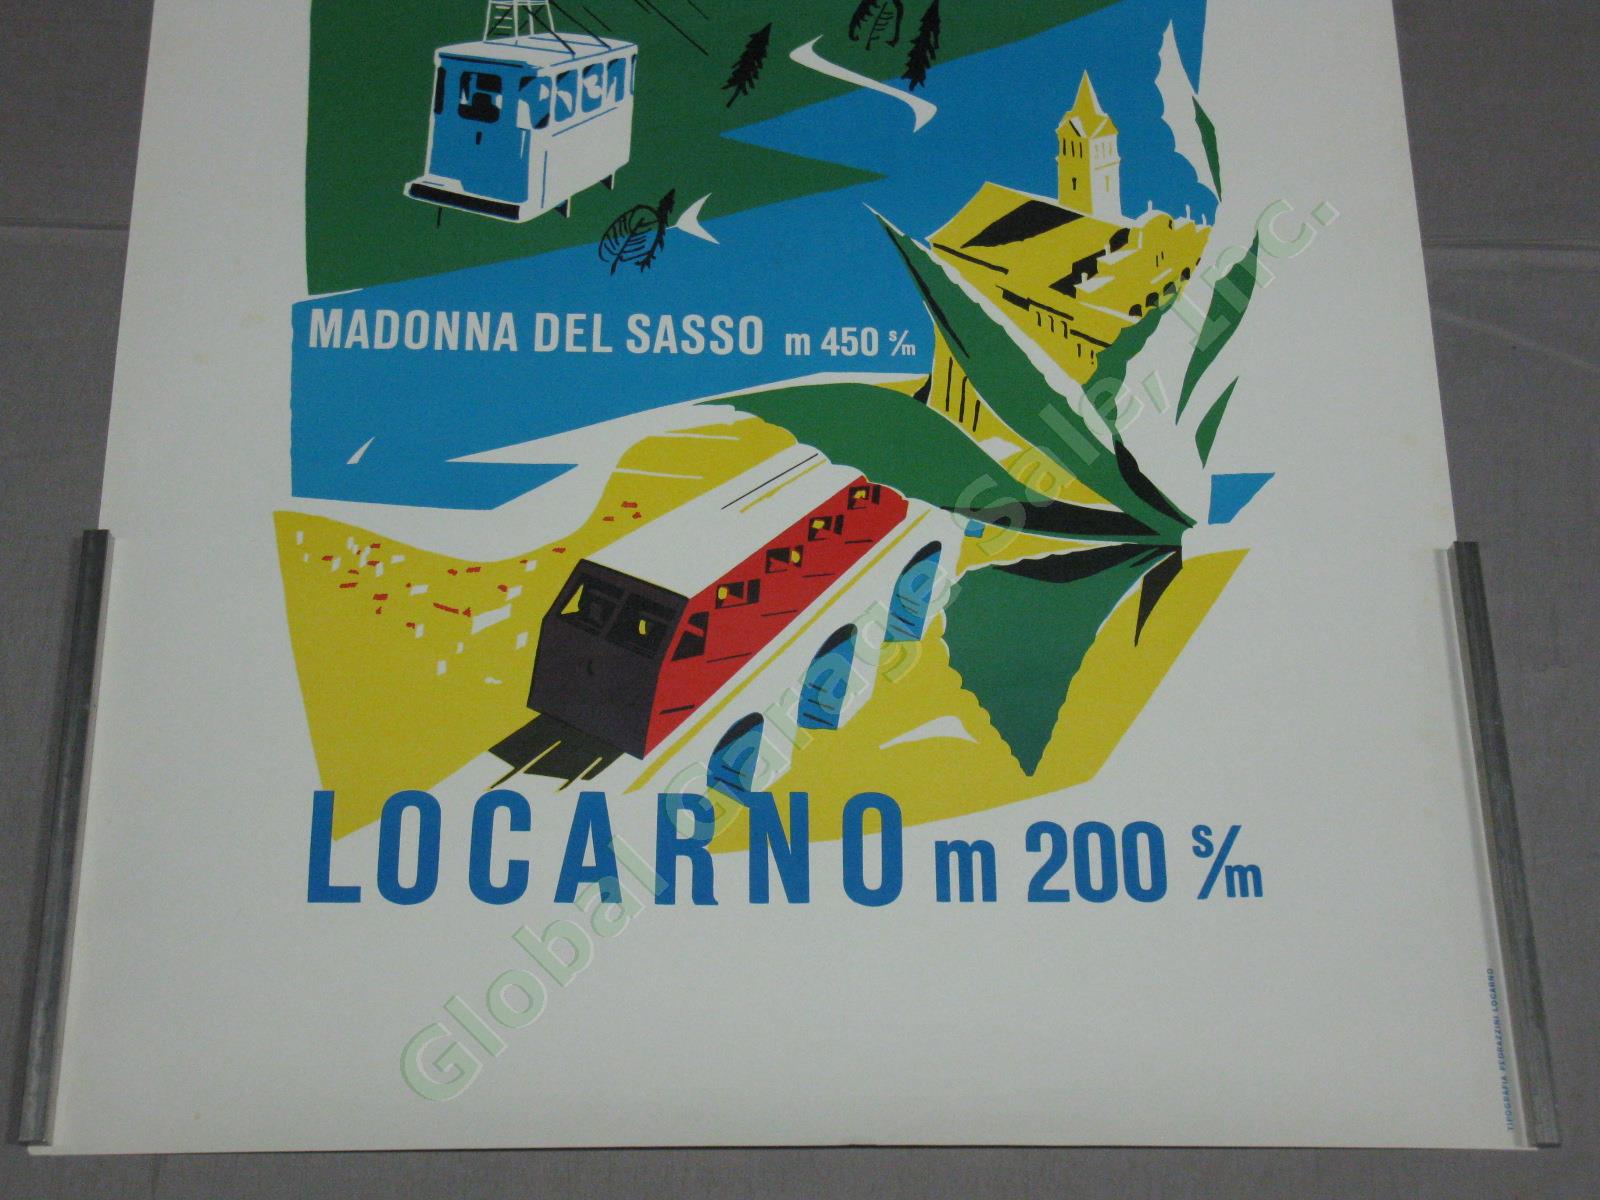 Vtg 1950s Swiss Travel Poster Locarno Ticino Switzerland Cog Railway Cable Car 2